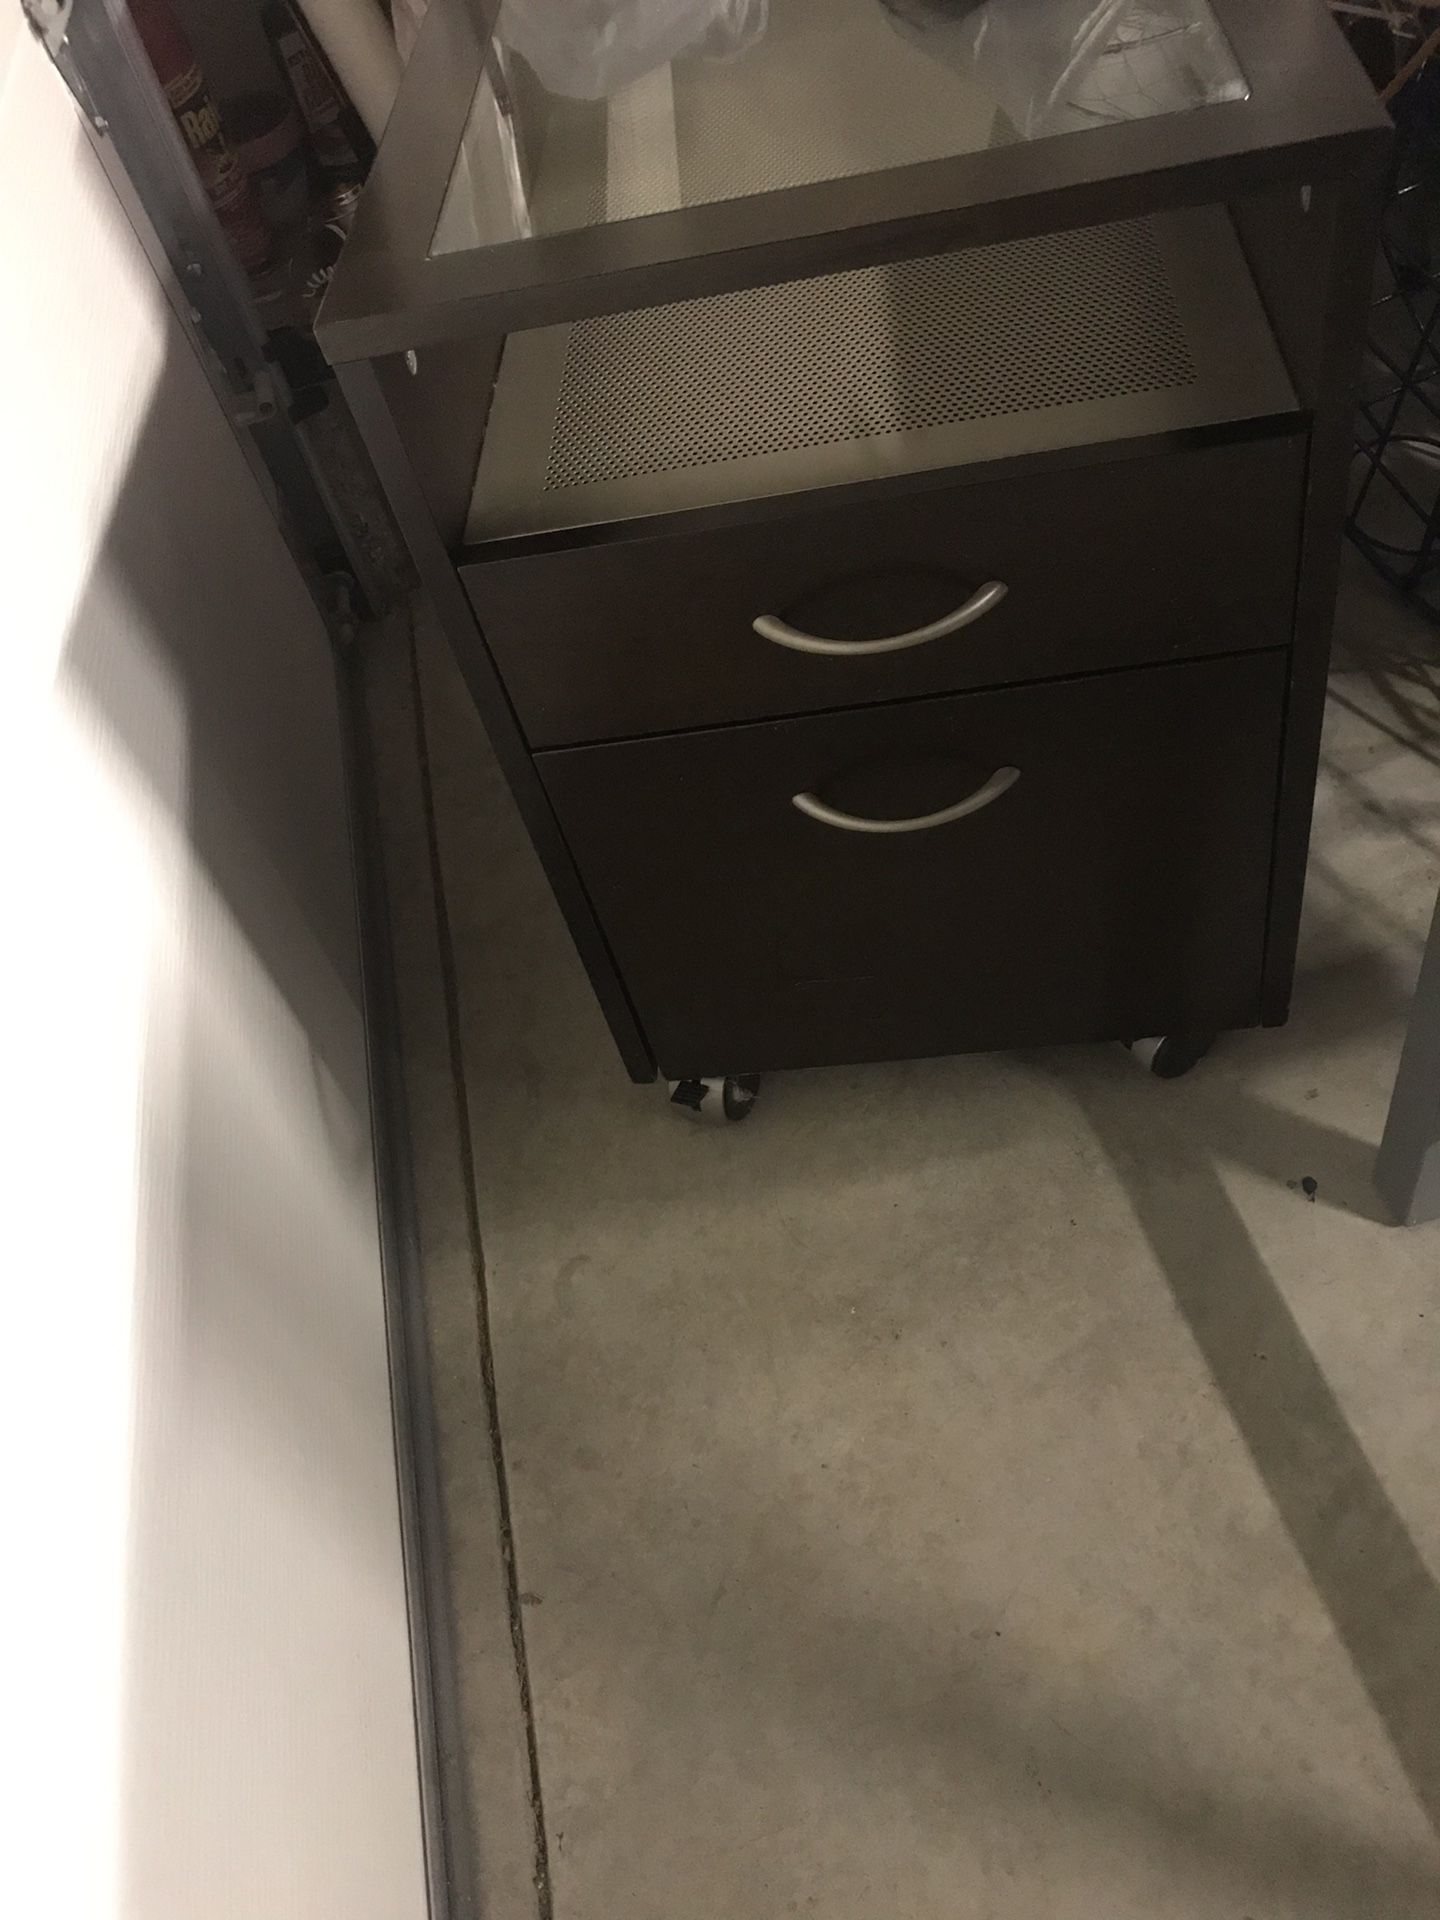 Drawer under the desk